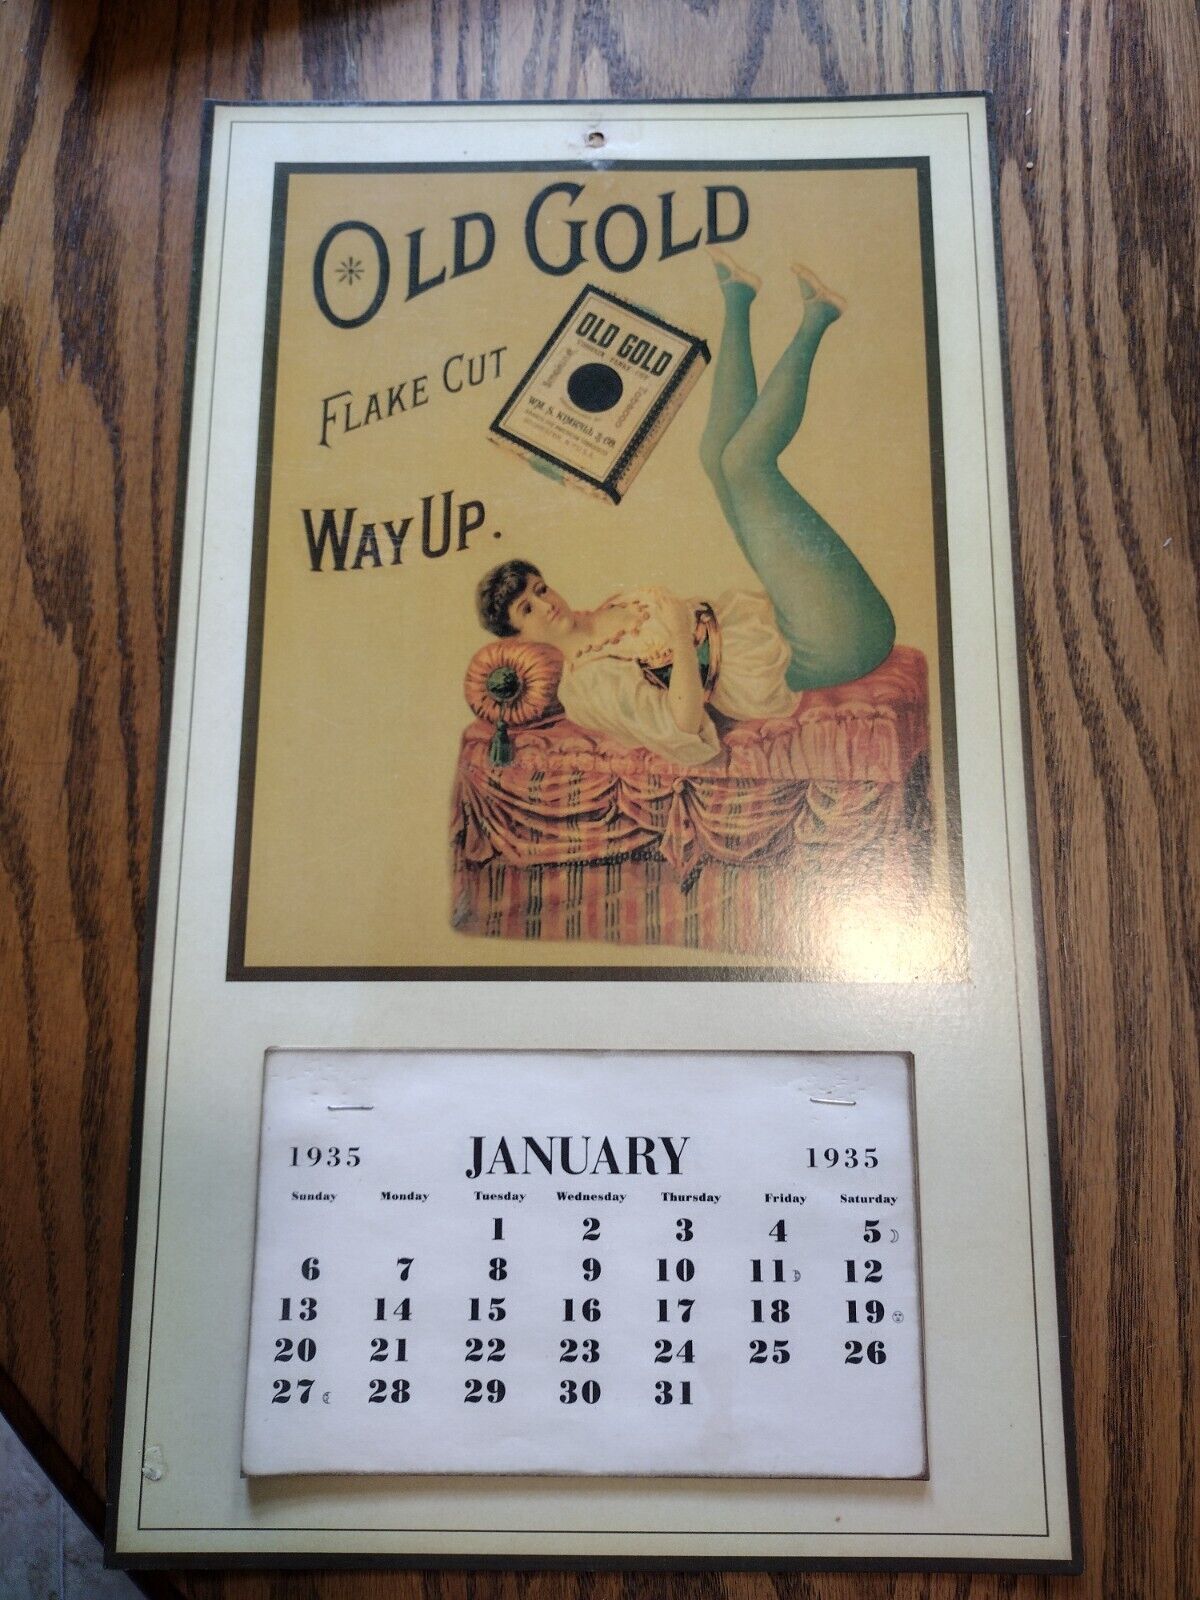 1935 Old Gold vintage calendar repop pin up complete